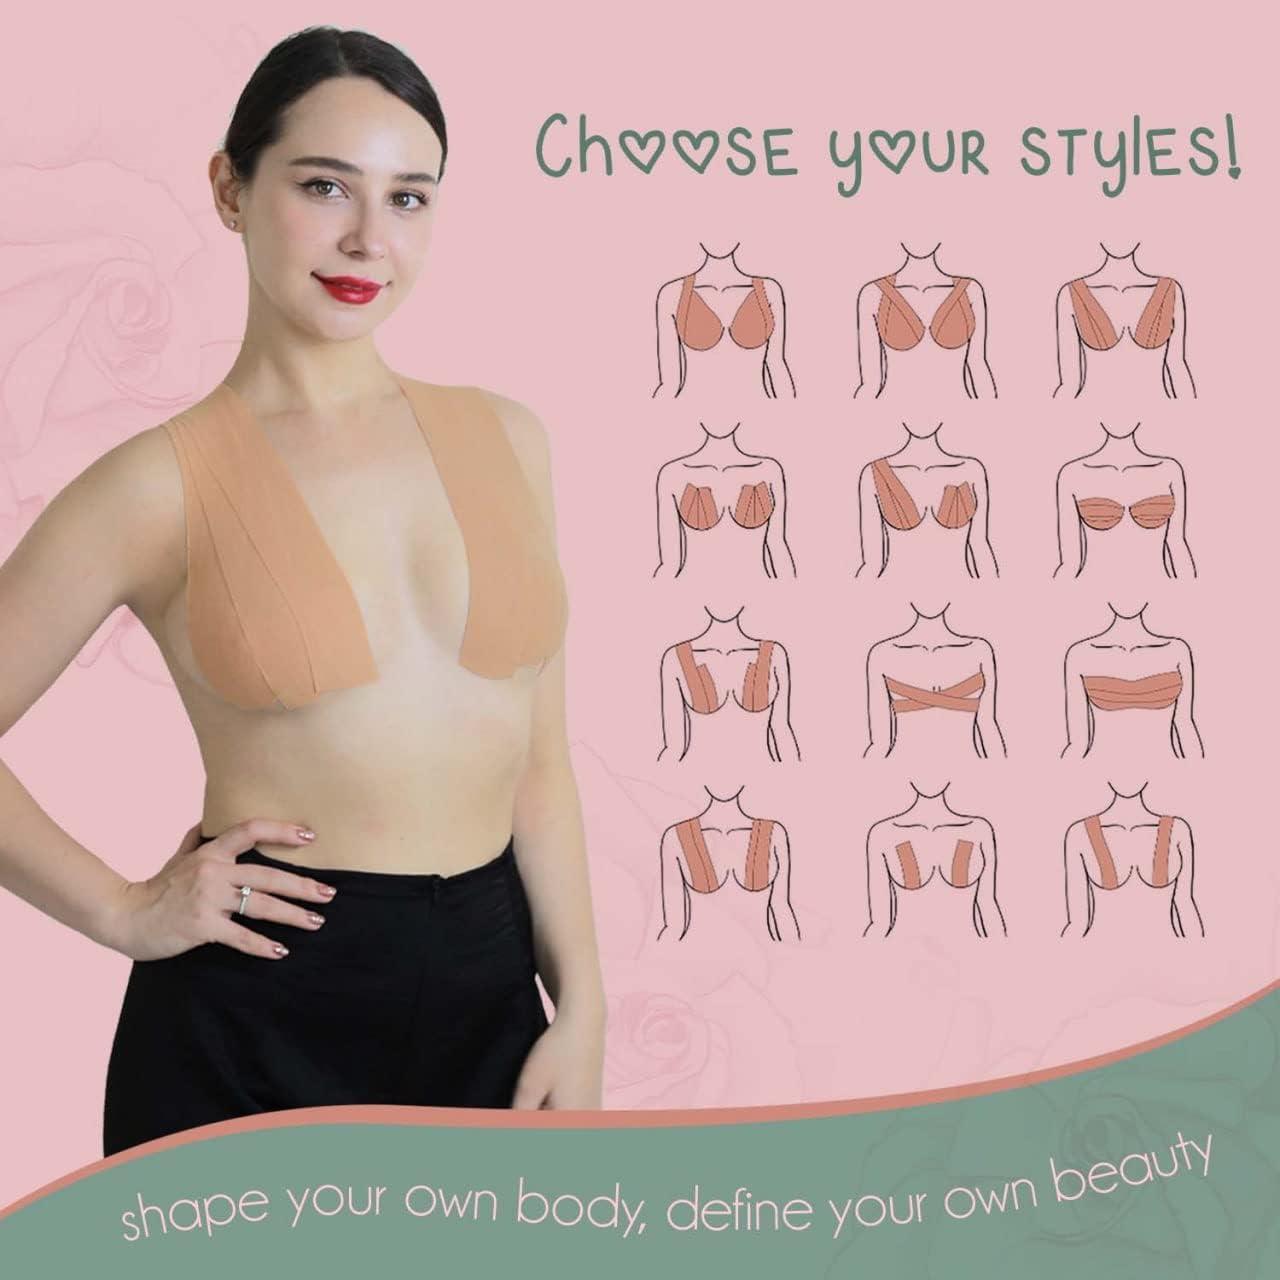 GAKI Store Boob Tape, Boobytape for Breast Lift l Sweat-Proof